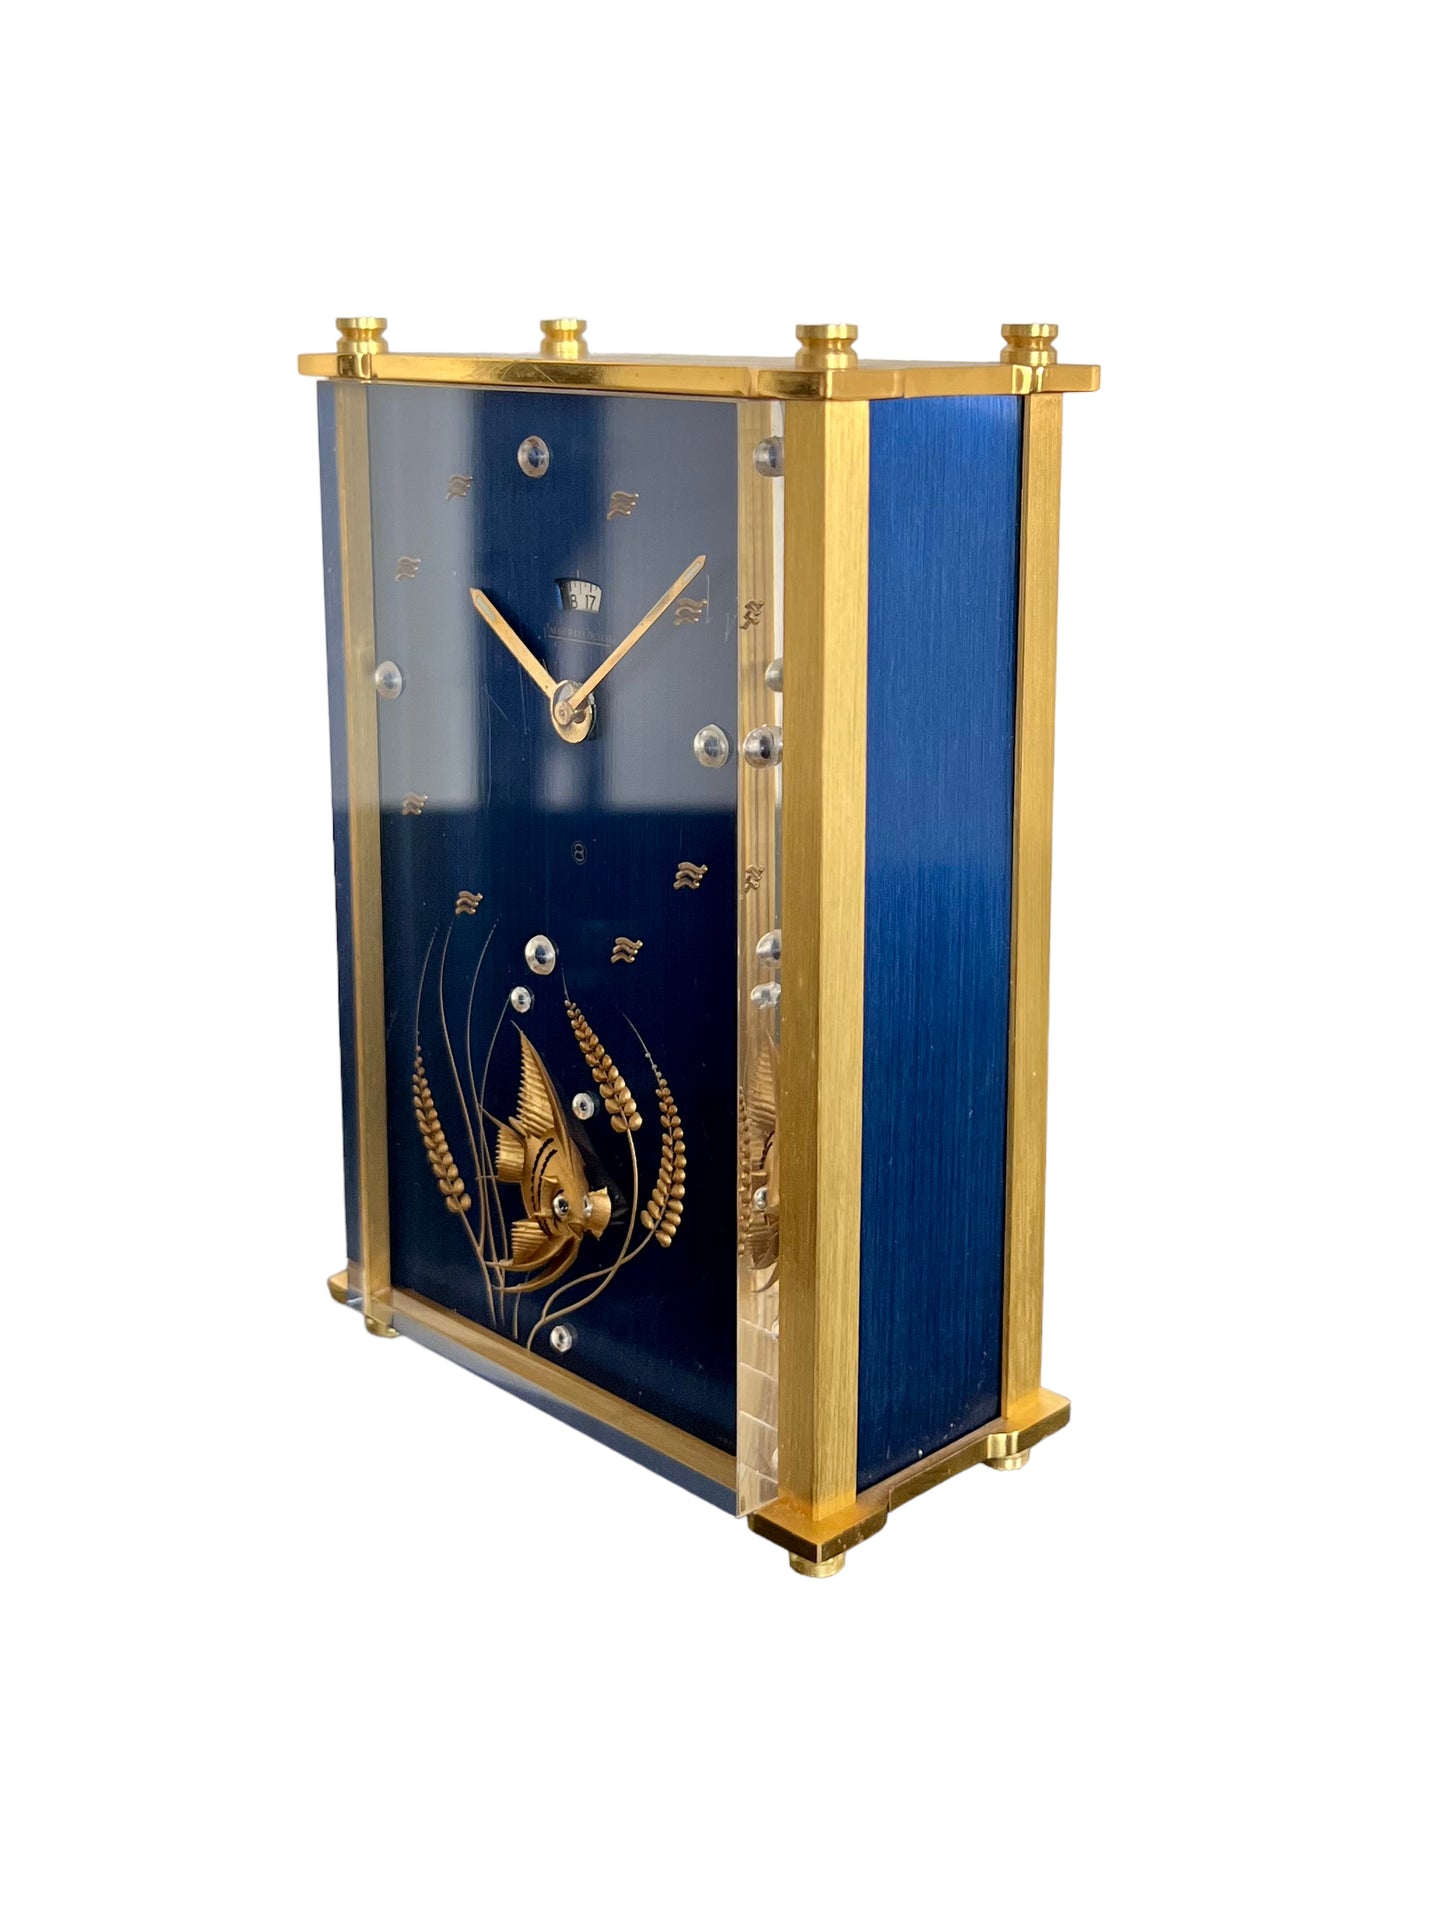 Jaeger-LeCoultre Marina 8 days music alarm Desk Clock Uhr Pendulette Blue Dial